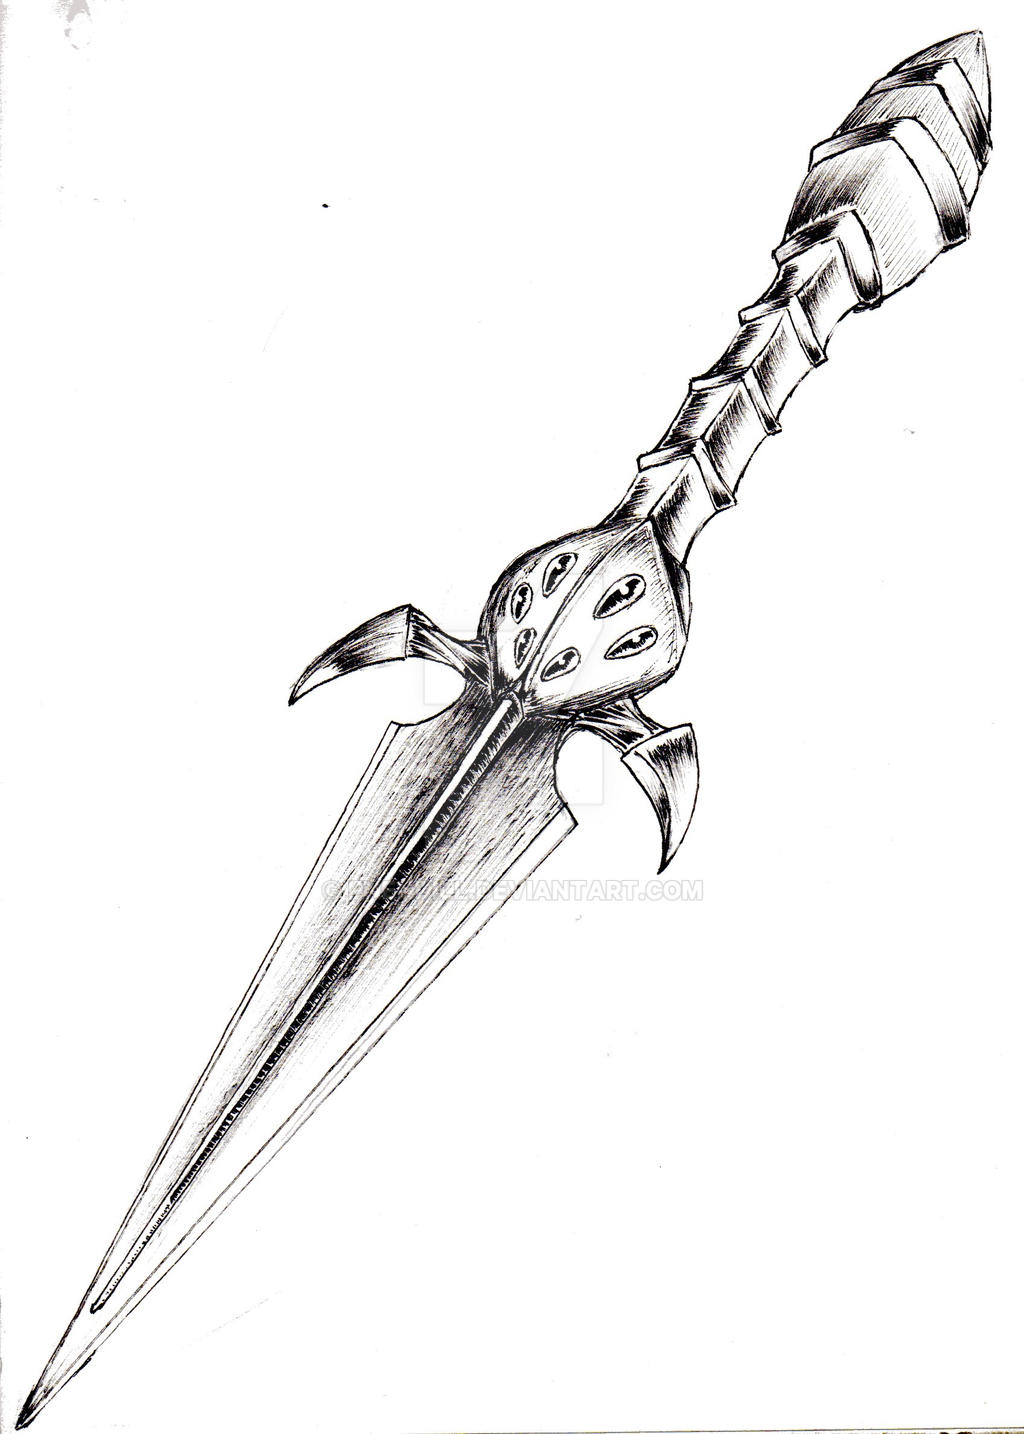 Drow Dagger by Enendill on DeviantArt